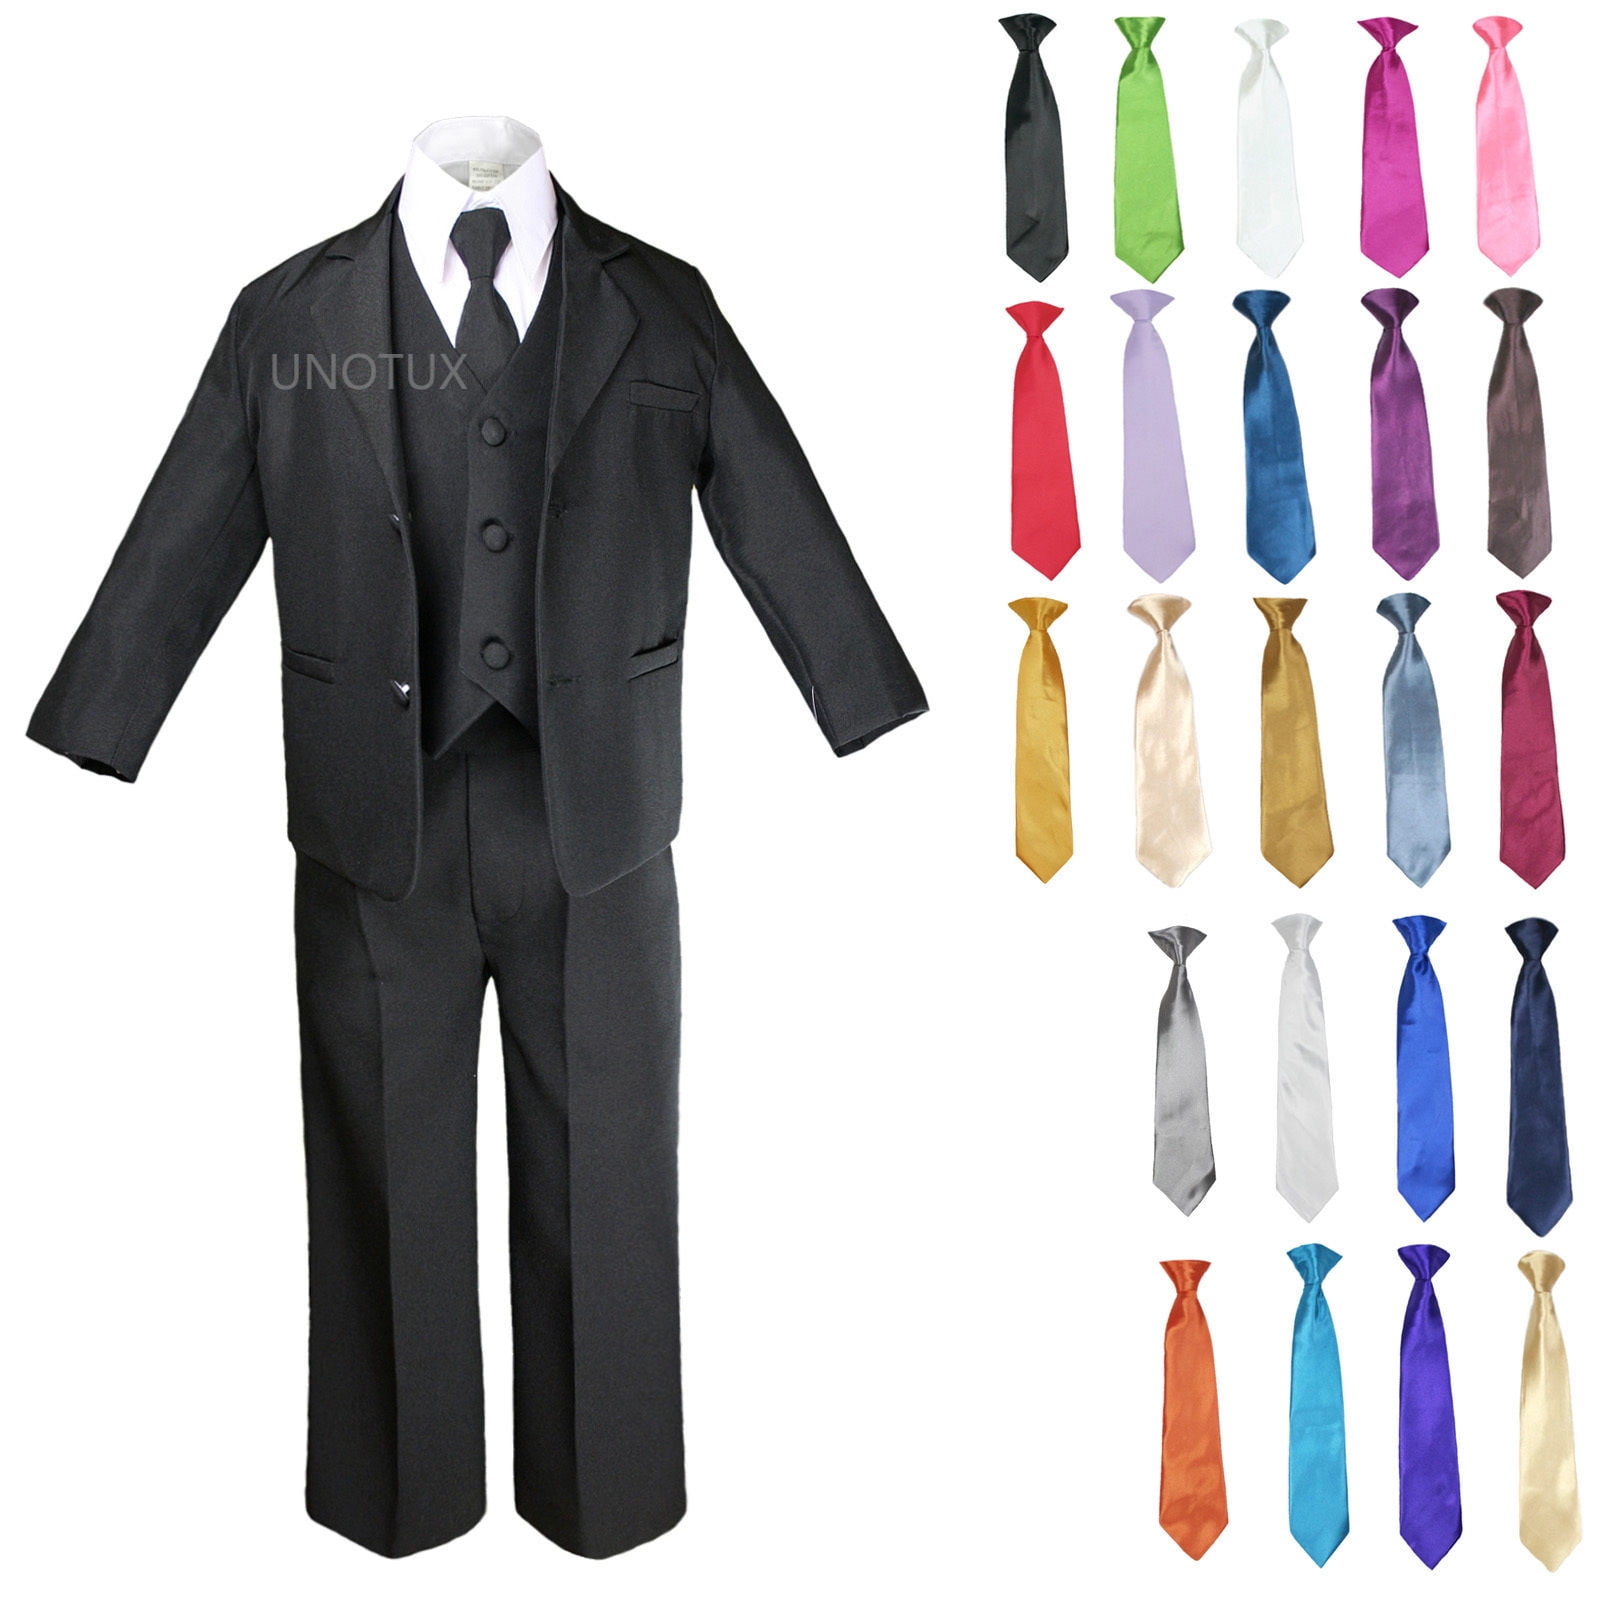 Various Solid Color Kids Boy's Suit Elastic Necktie For Wedding Party Tuxedo 